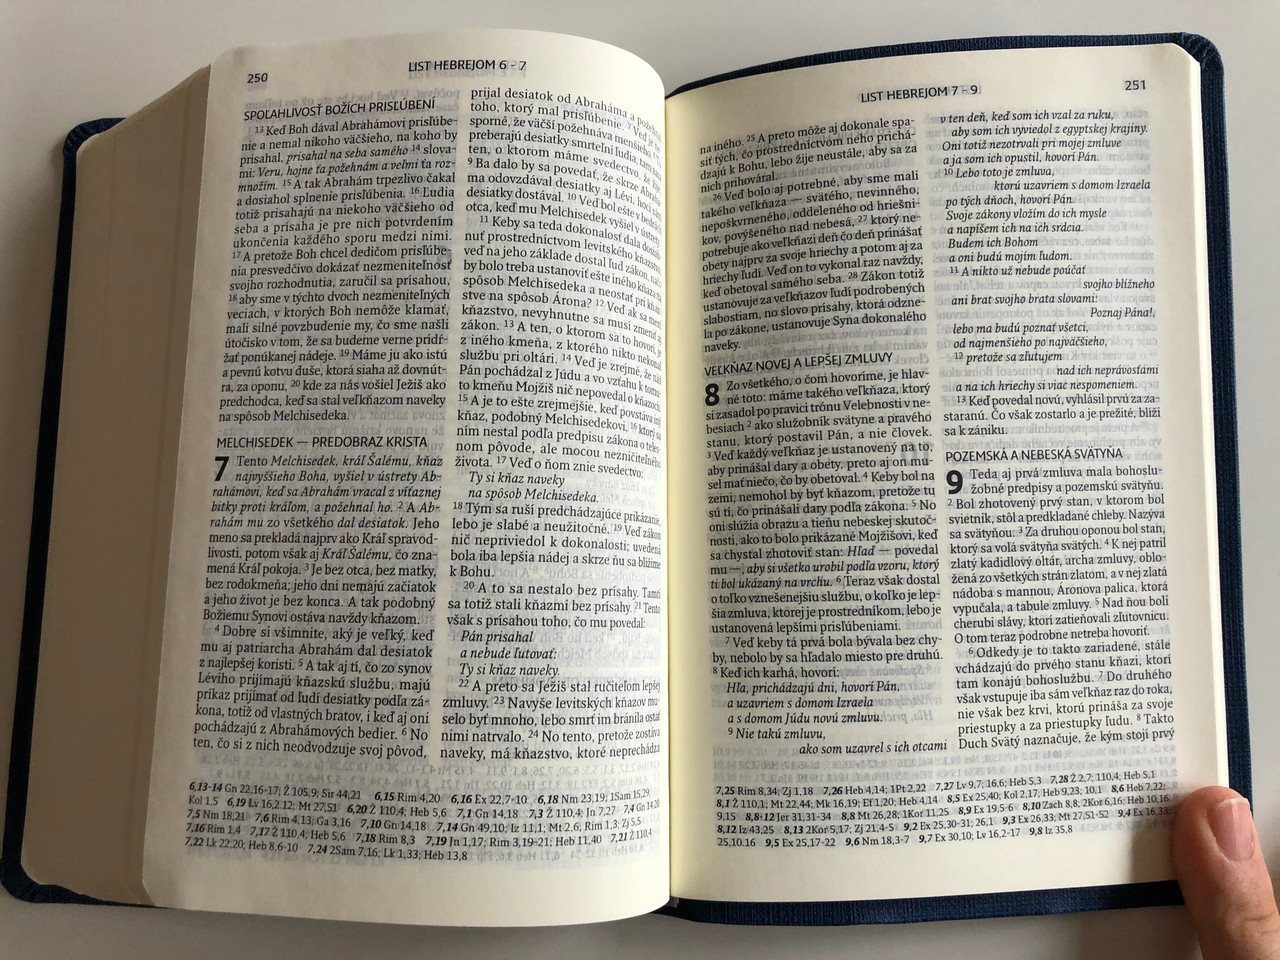 Slovak Ecumenical Bible / Biblia - Slovenský Ekumenický Preklad / Slovenská  Biblická Spoločnost 2015 / Modry / Soft blue cover - bibleinmylanguage